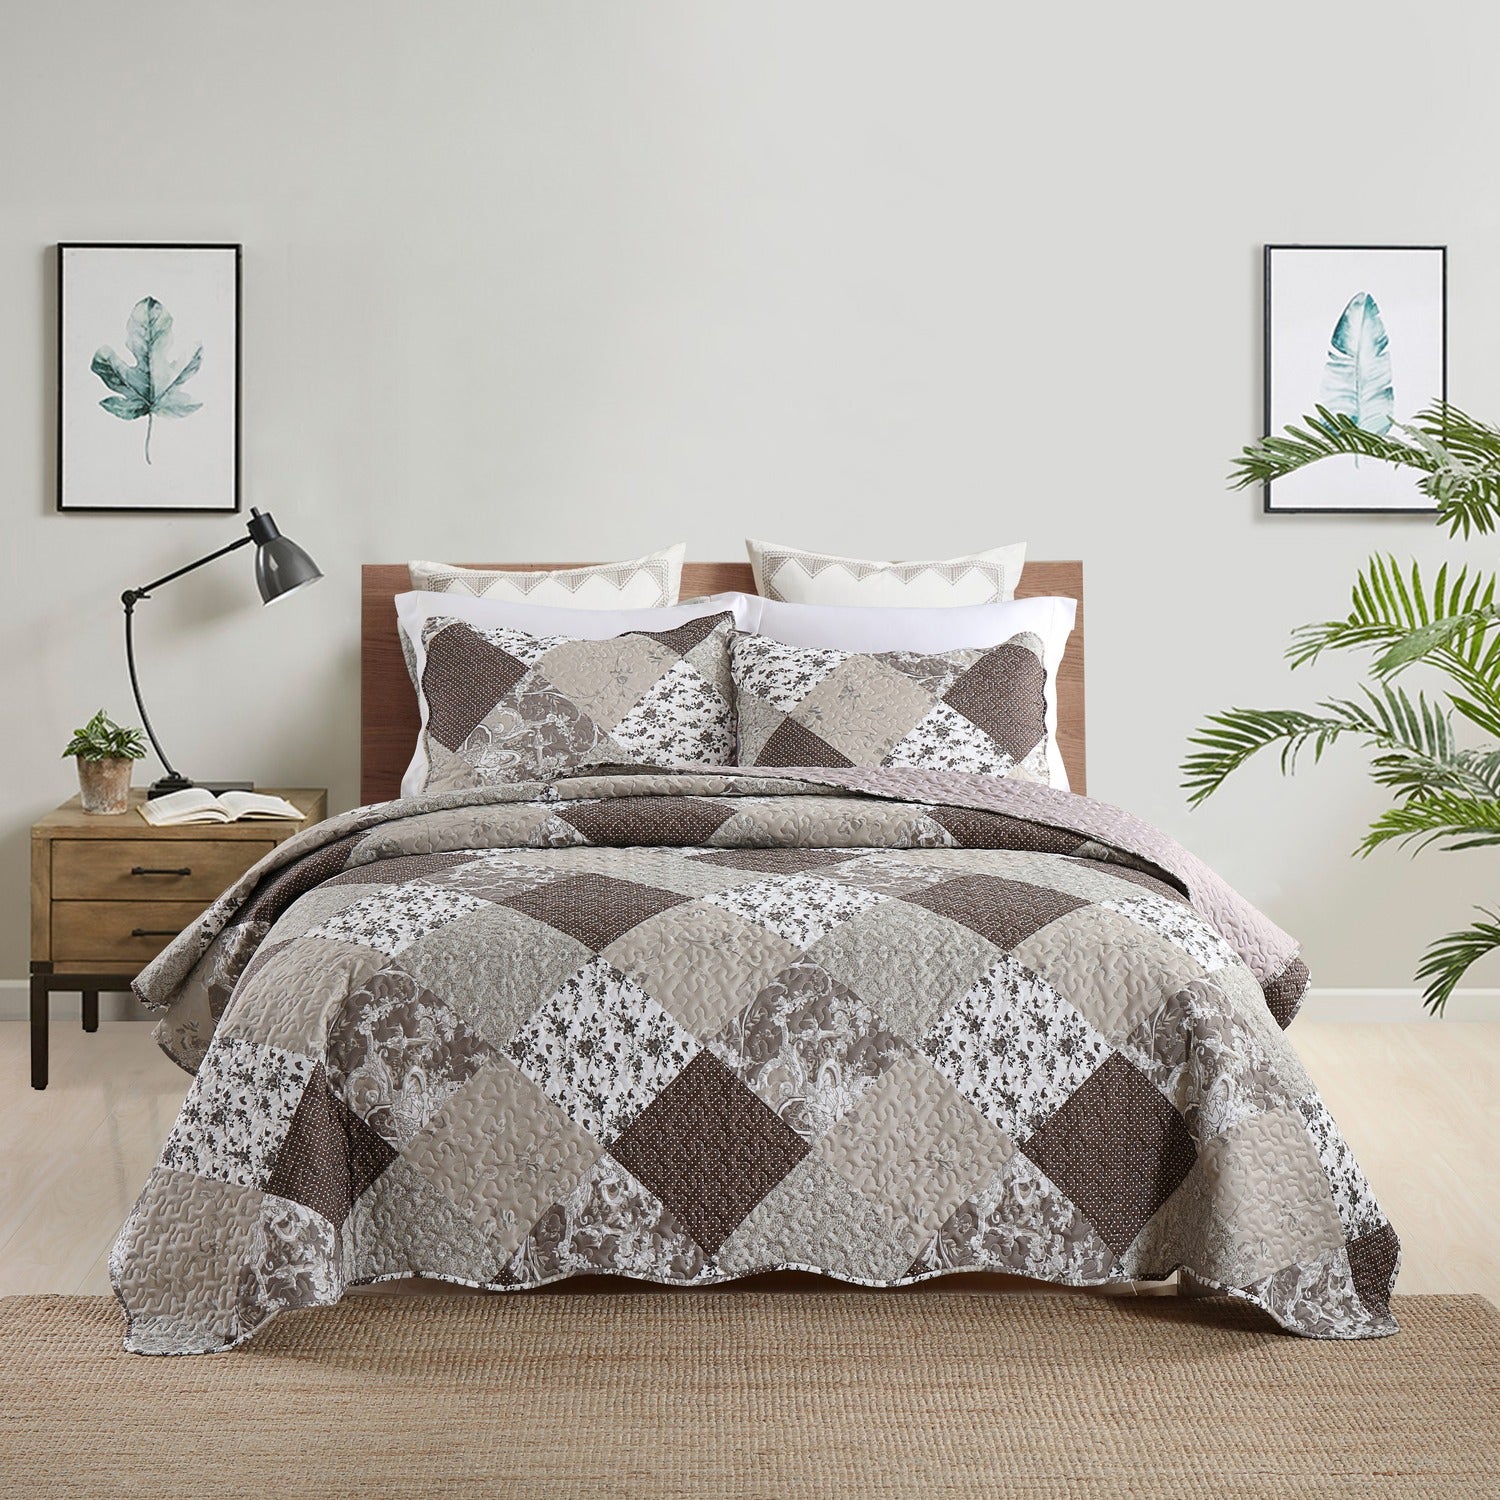 Dimond Brown Floral 3pc Bedspread Quilt Set. Stitch Quilted Coverlet Set, Neutral Solid Quilt Set for Bedroom, Microfiber